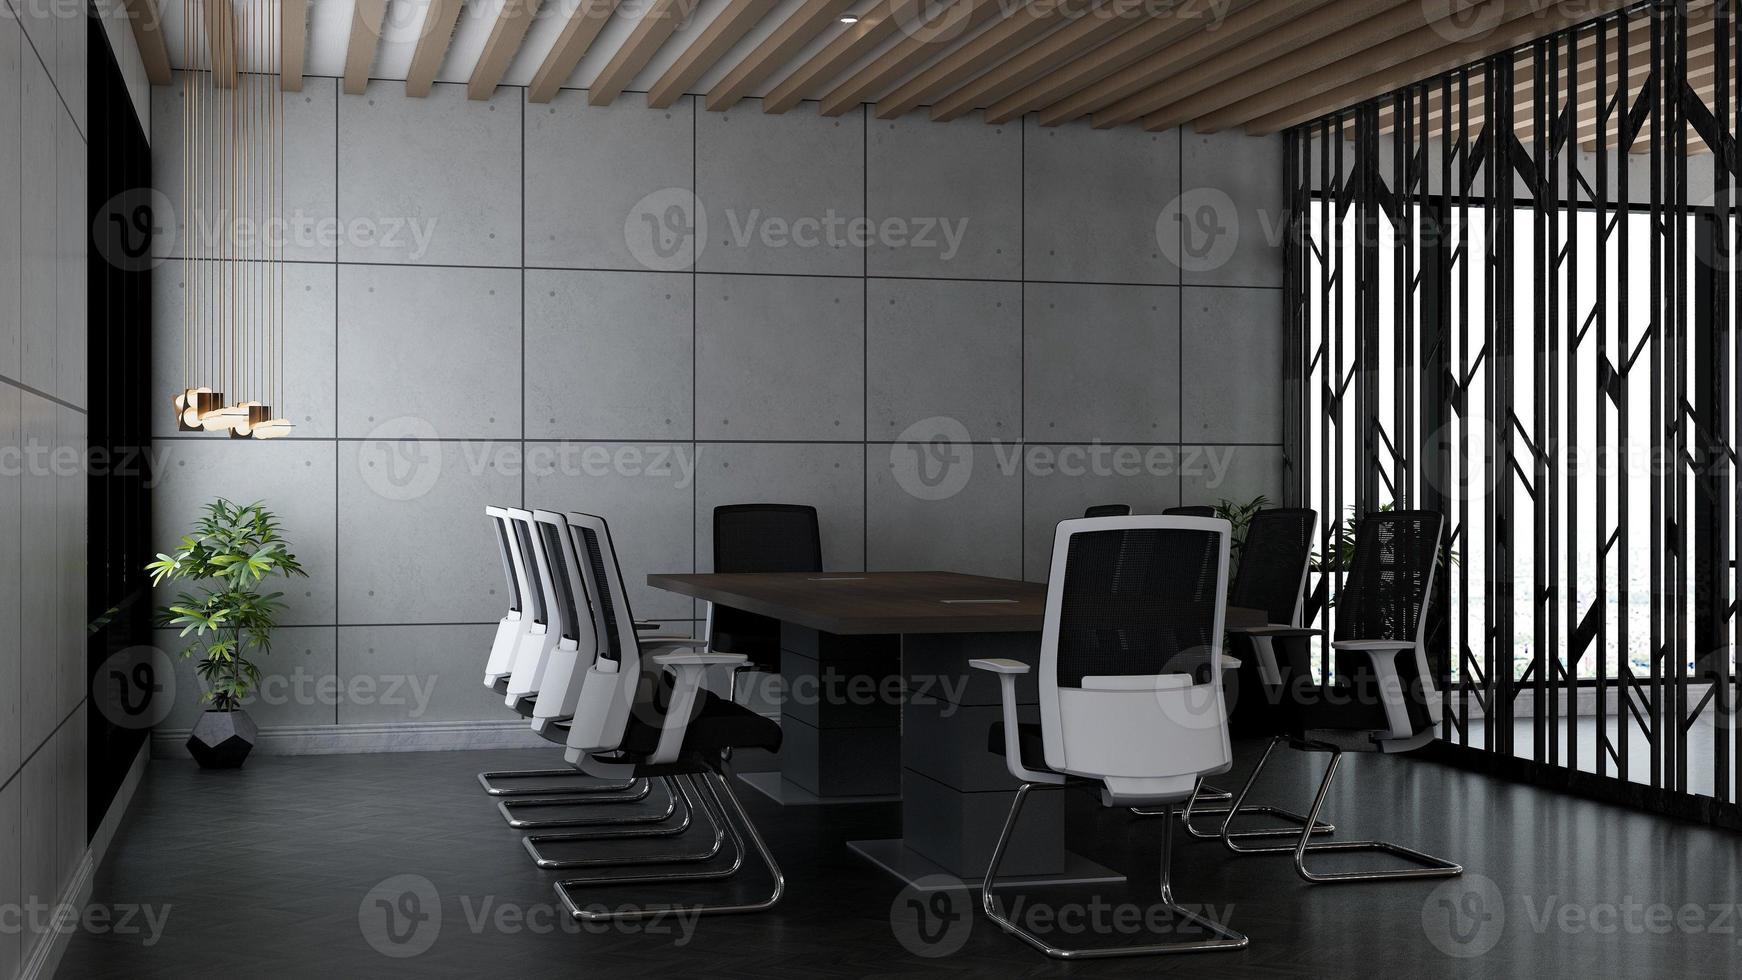 Design d'intérieur de bureau de rendu 3d - salle de réunion exécutive photo